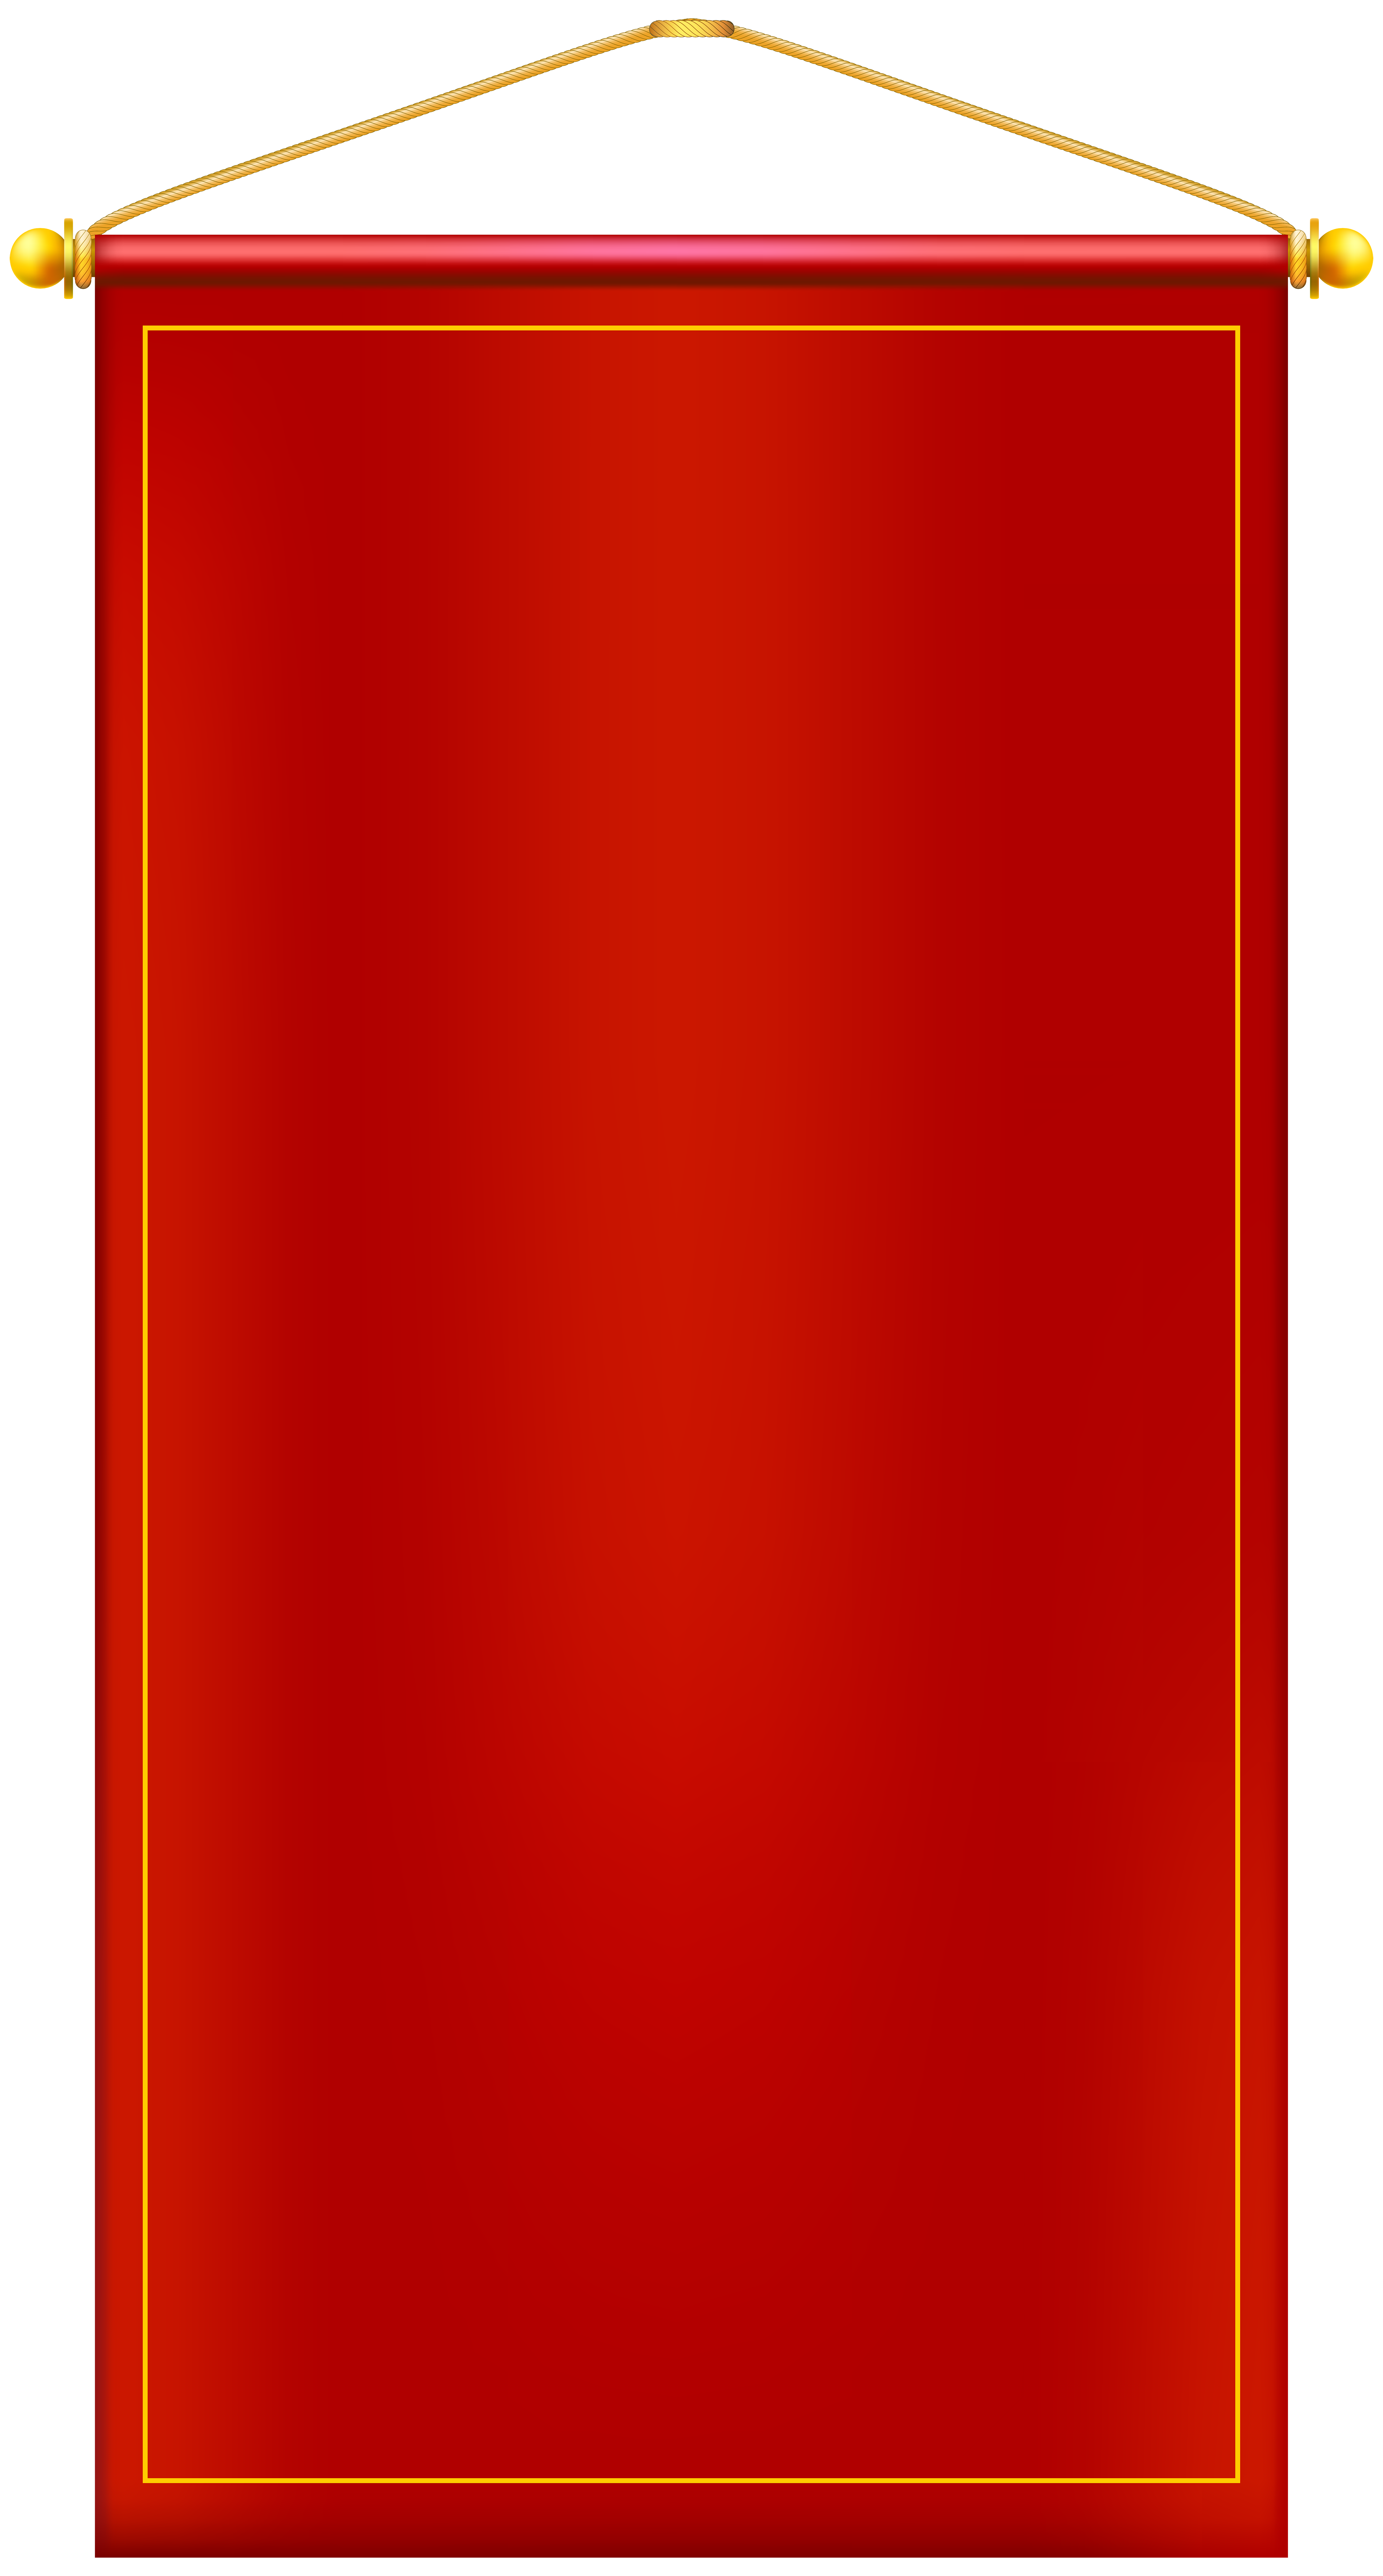 Vertical Red Banner PNG Clip Art Image